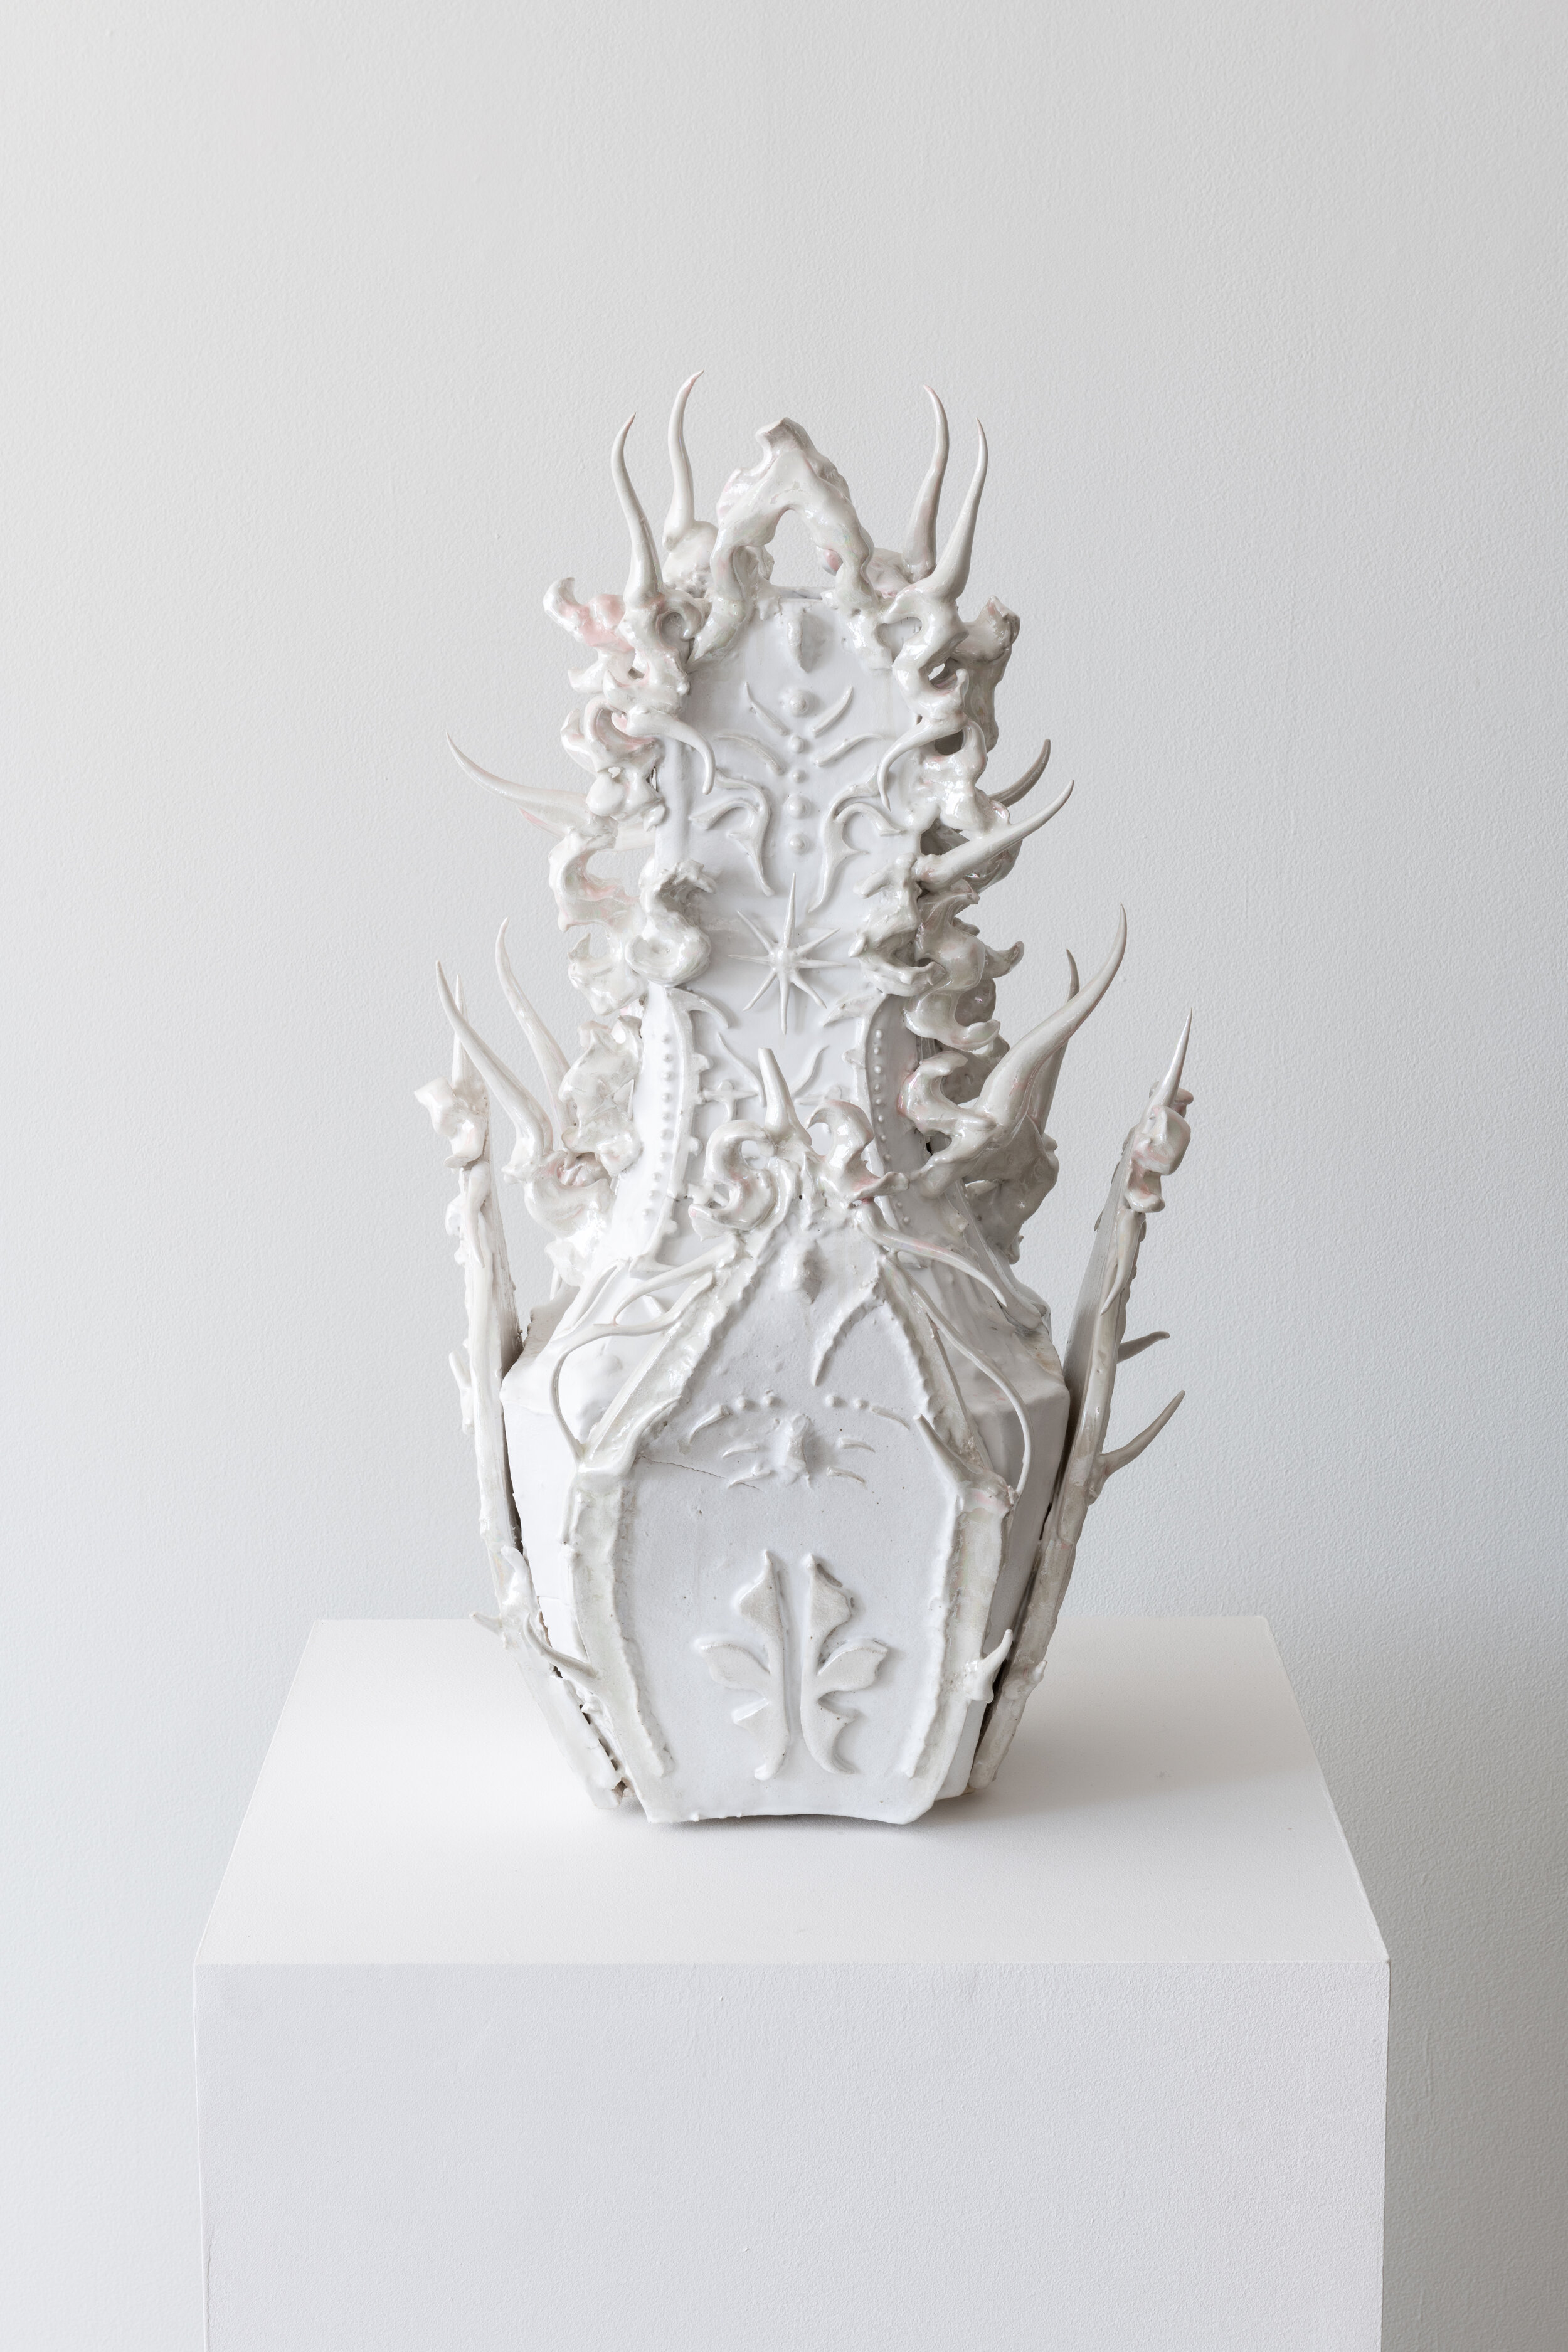  Evangeline AdaLioryn  Lotus Vessel  2021 Glazed porcelaineous stoneware, luster 26 x 14 x 17 inches  Photo by Ruben Diaz 